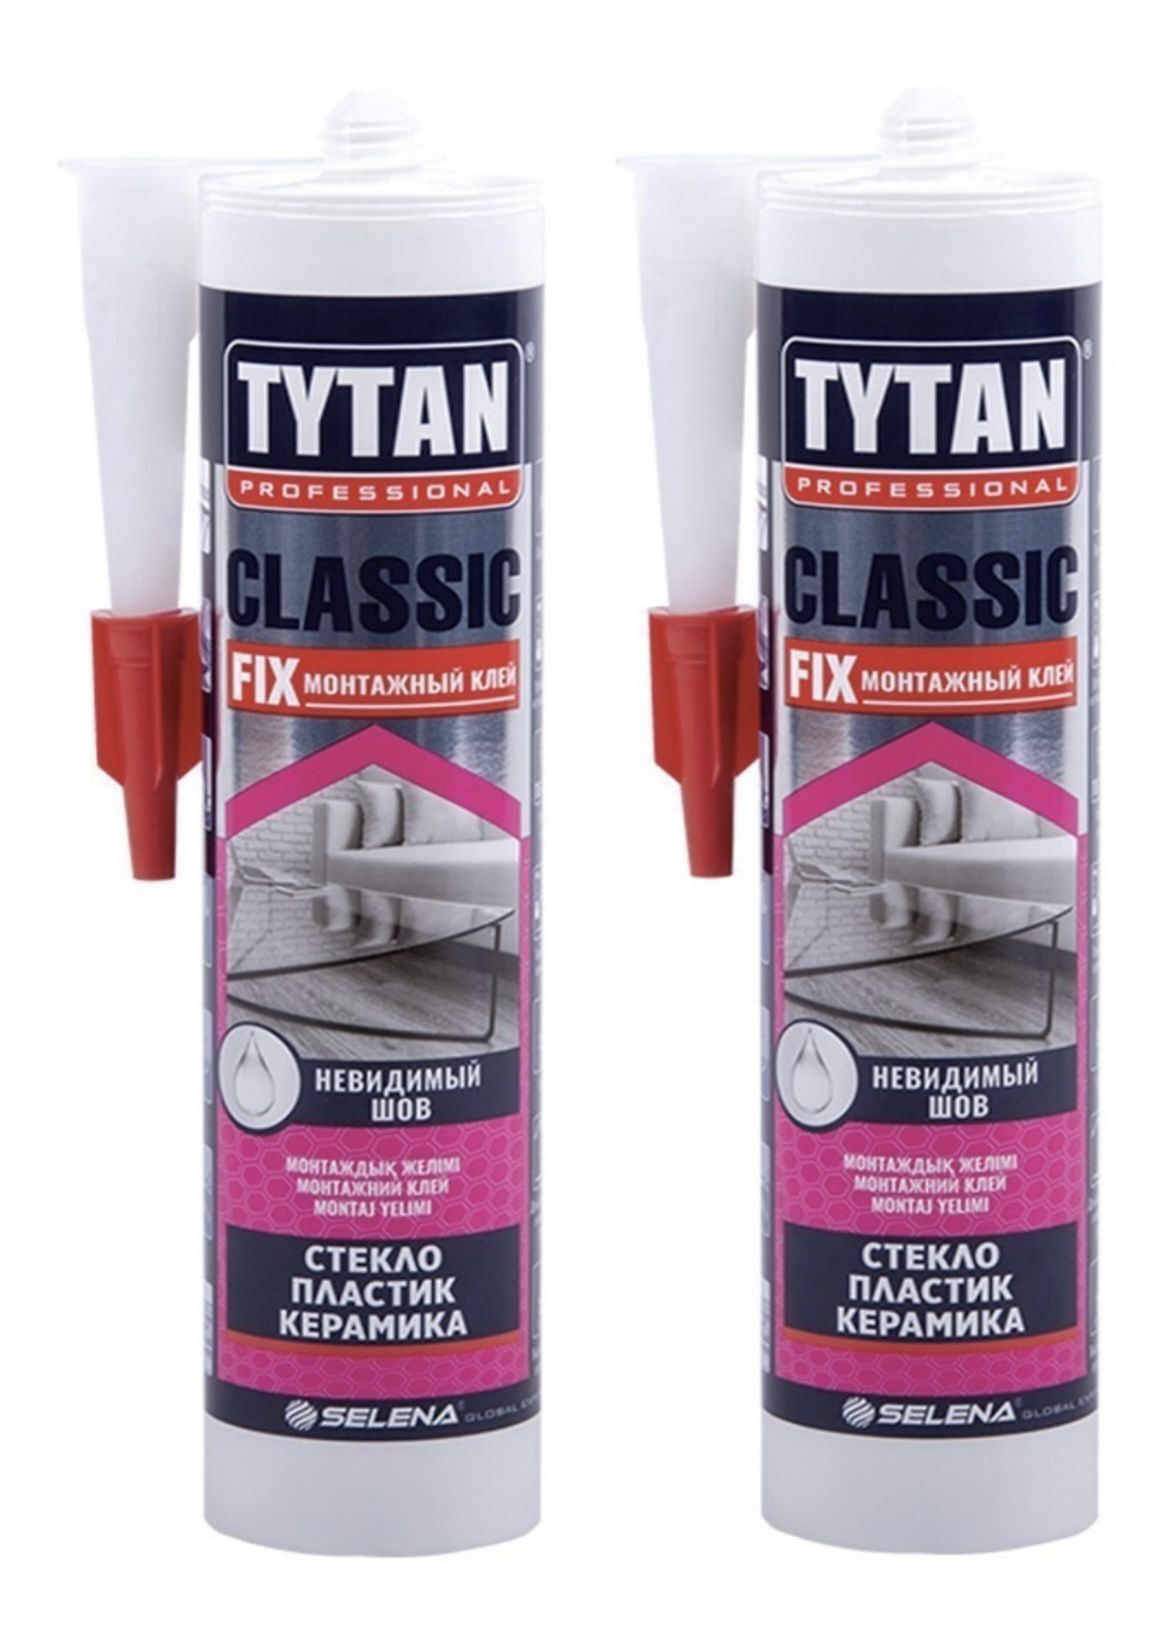 Tytan classic fix прозрачный. Tytan professional Classic Fix, 310 мл. Клей монтажный Tytan Classic Fix 310 мл. Tytan Classic Fix монтажный клей. Tytan professional клей монтажный Classic Fix, прозрачный, 310 мл.